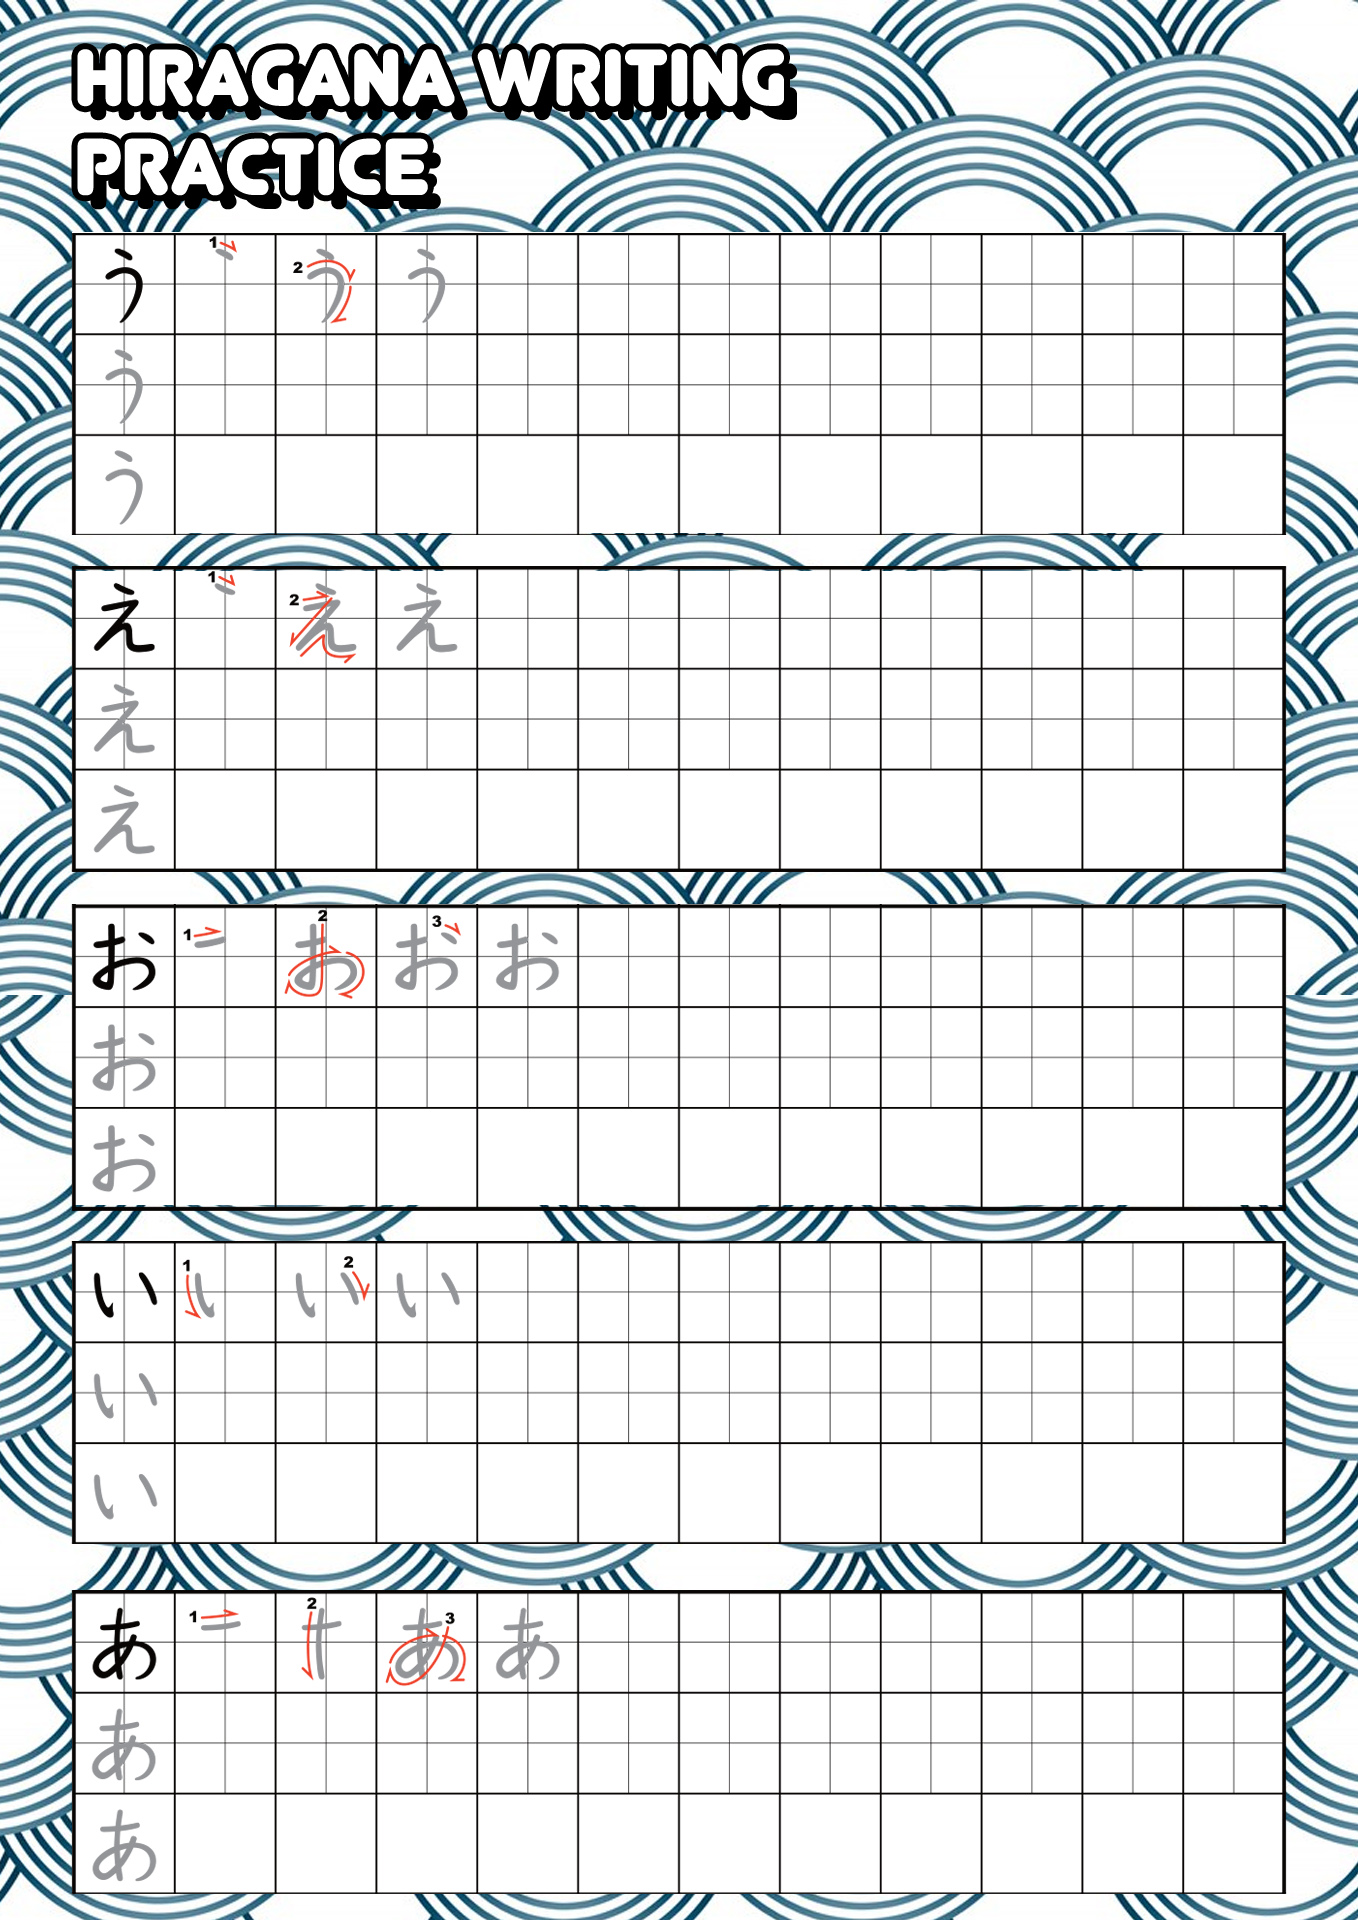 Hiragana Writing Practice Sheet Image